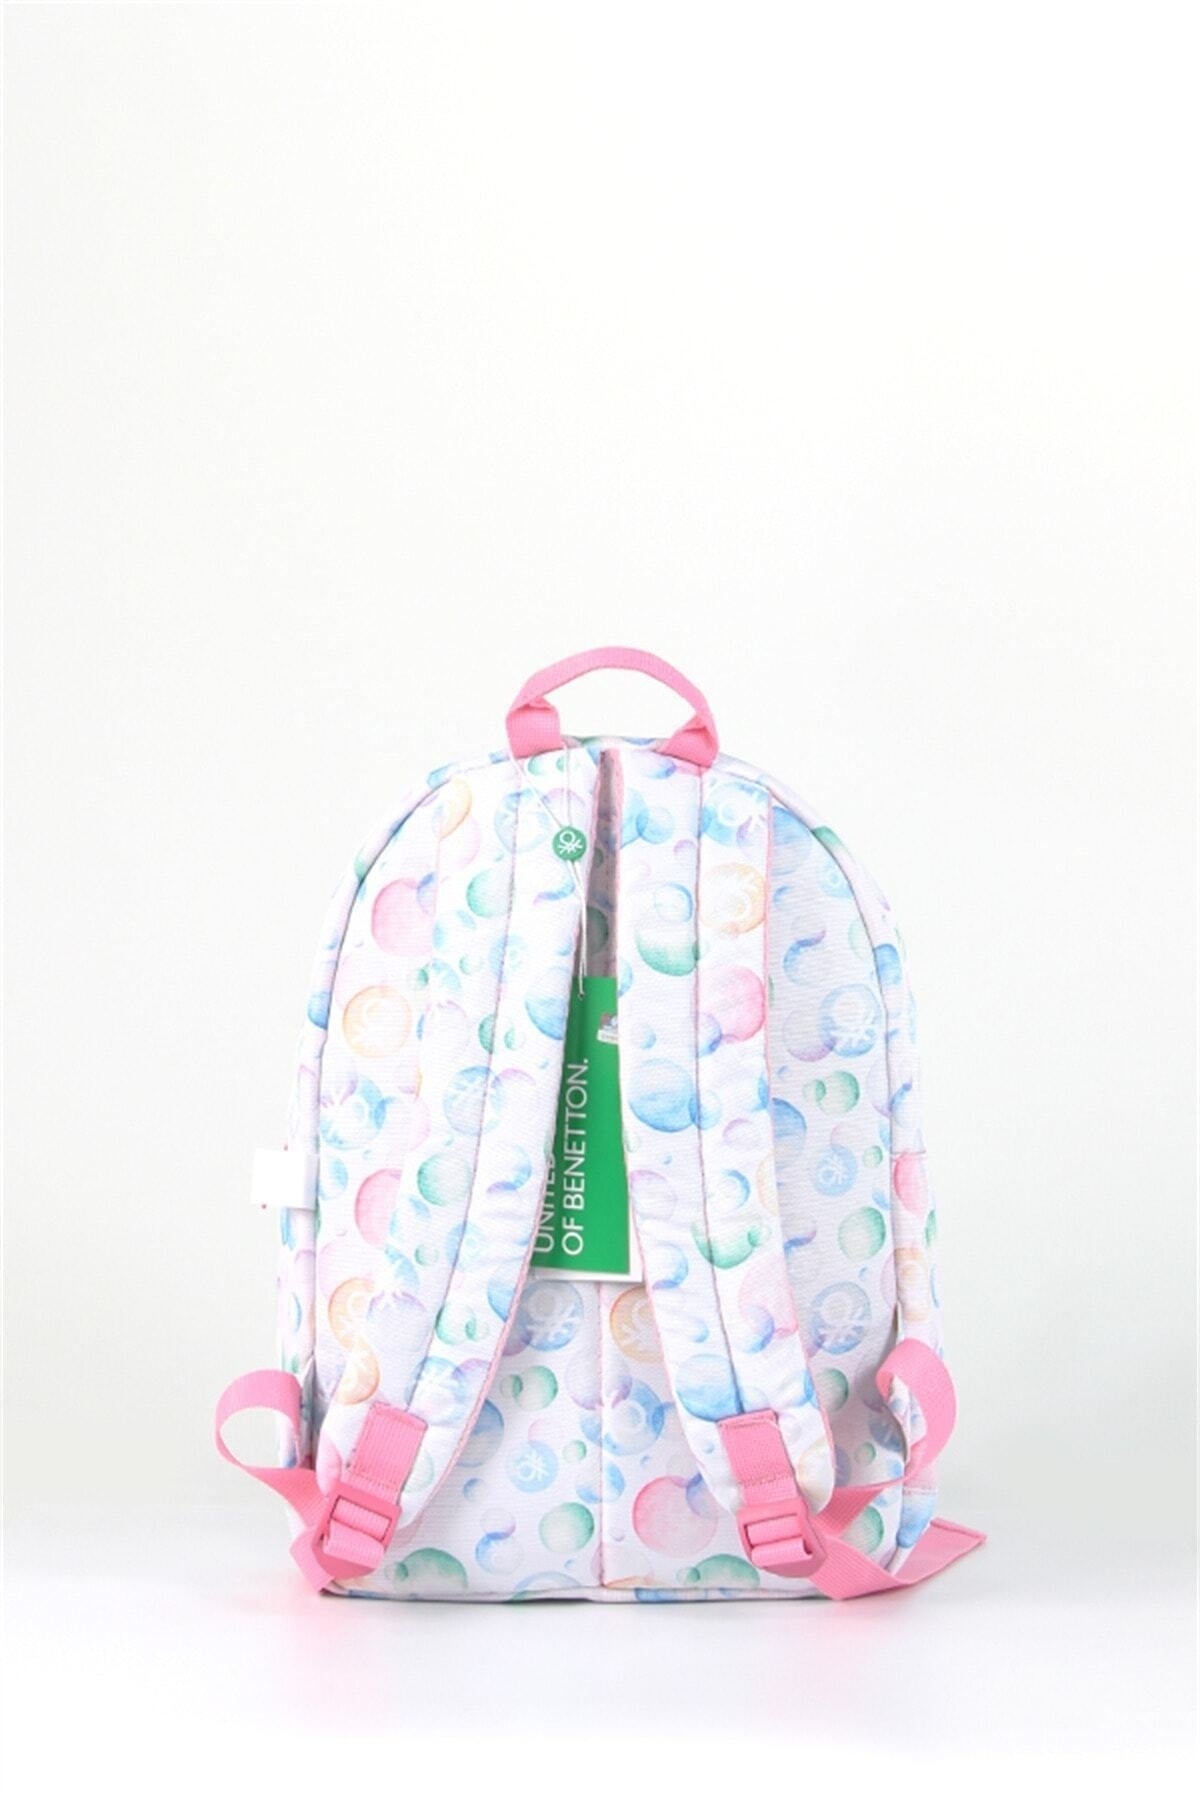 Primary School Bag 76143